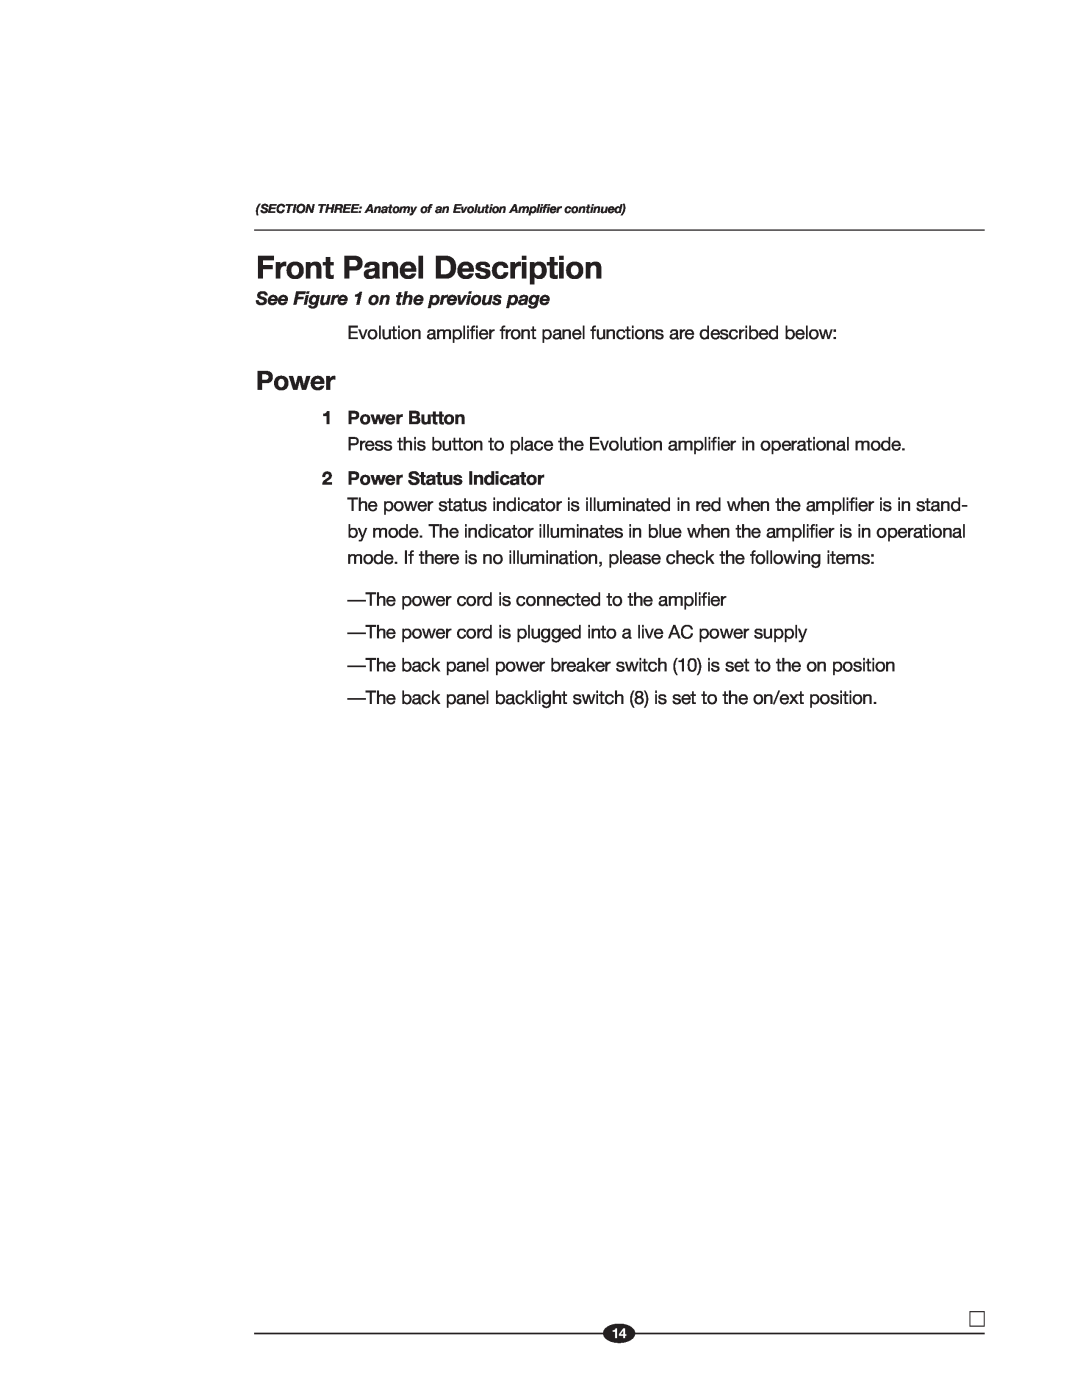 Krell Industries Evolution manual Front Panel Description, 1Power Button, 2Power Status Indicator 